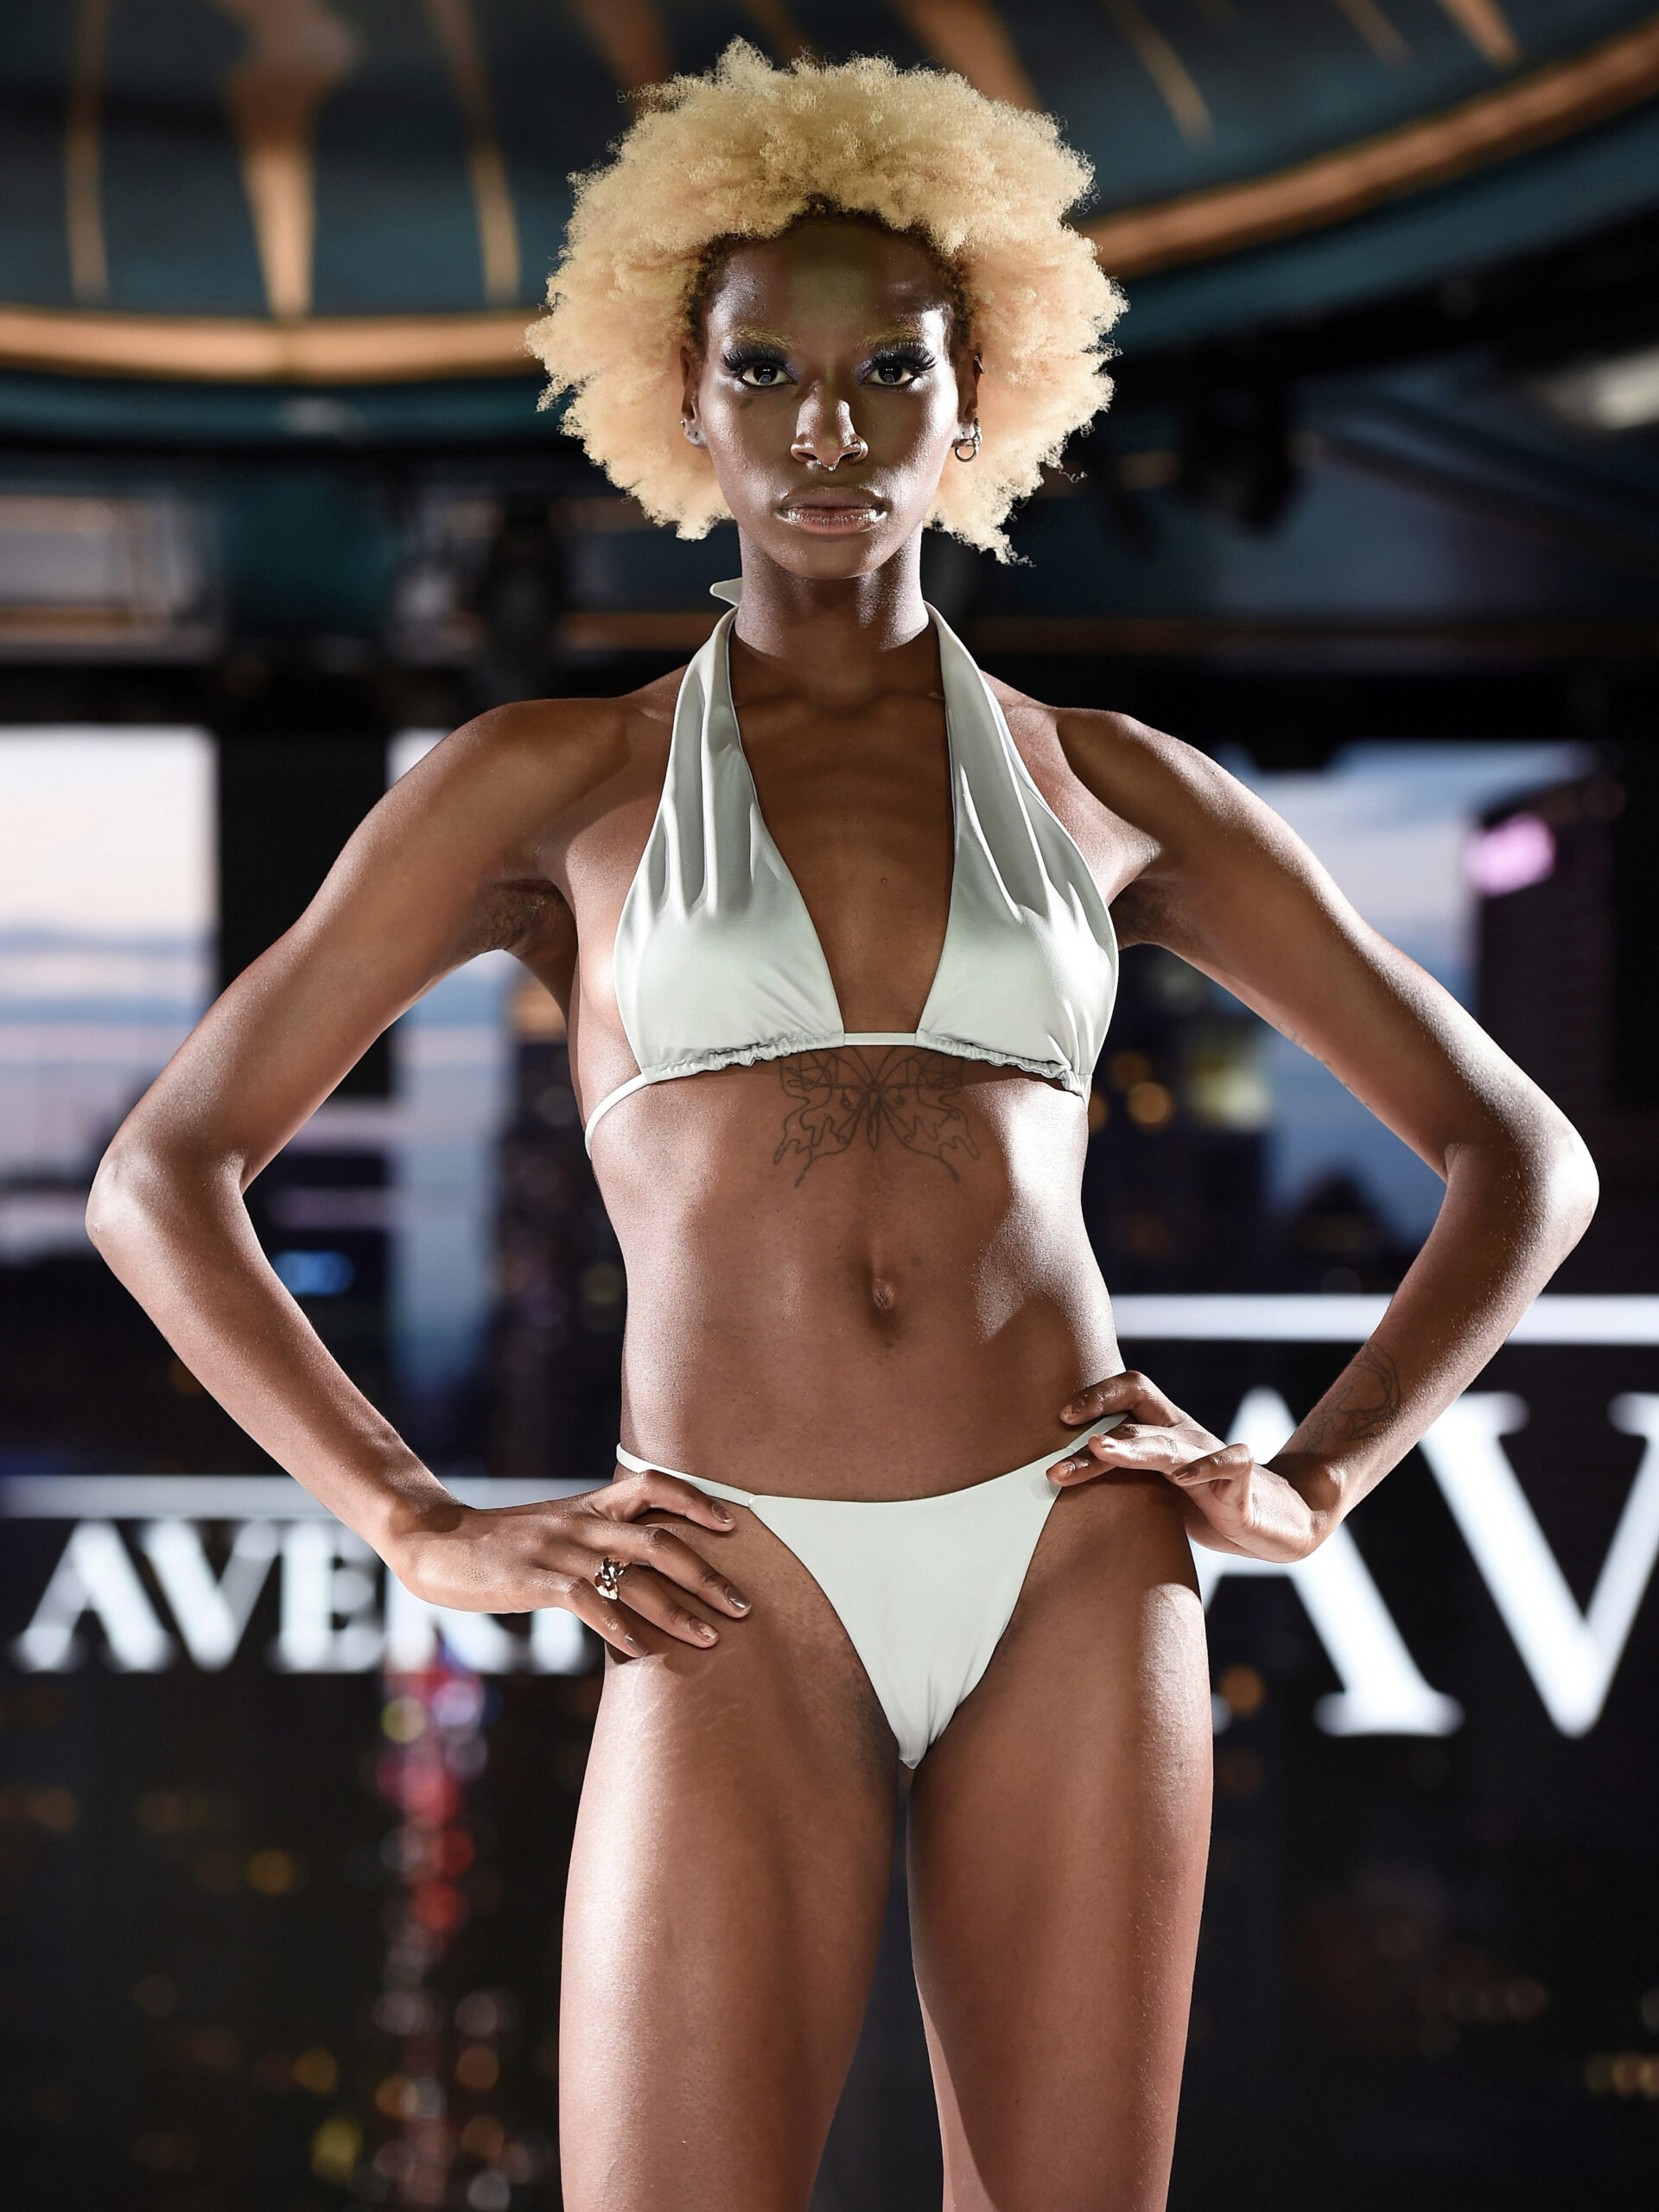 Runway 7 Fashion show Avery Swimwear